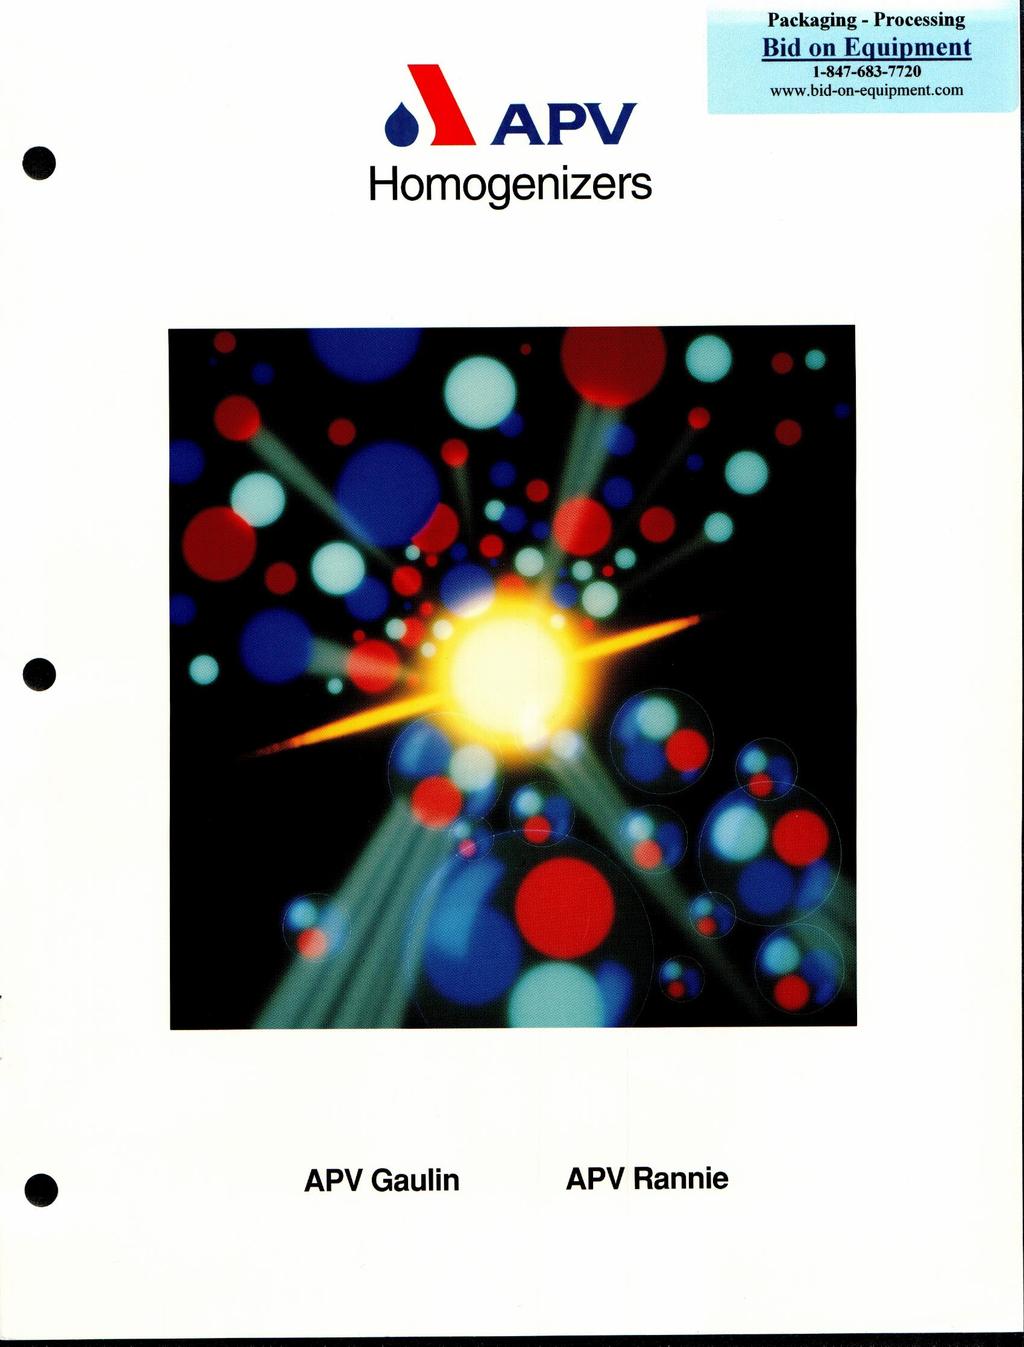 A APV Homogenizers